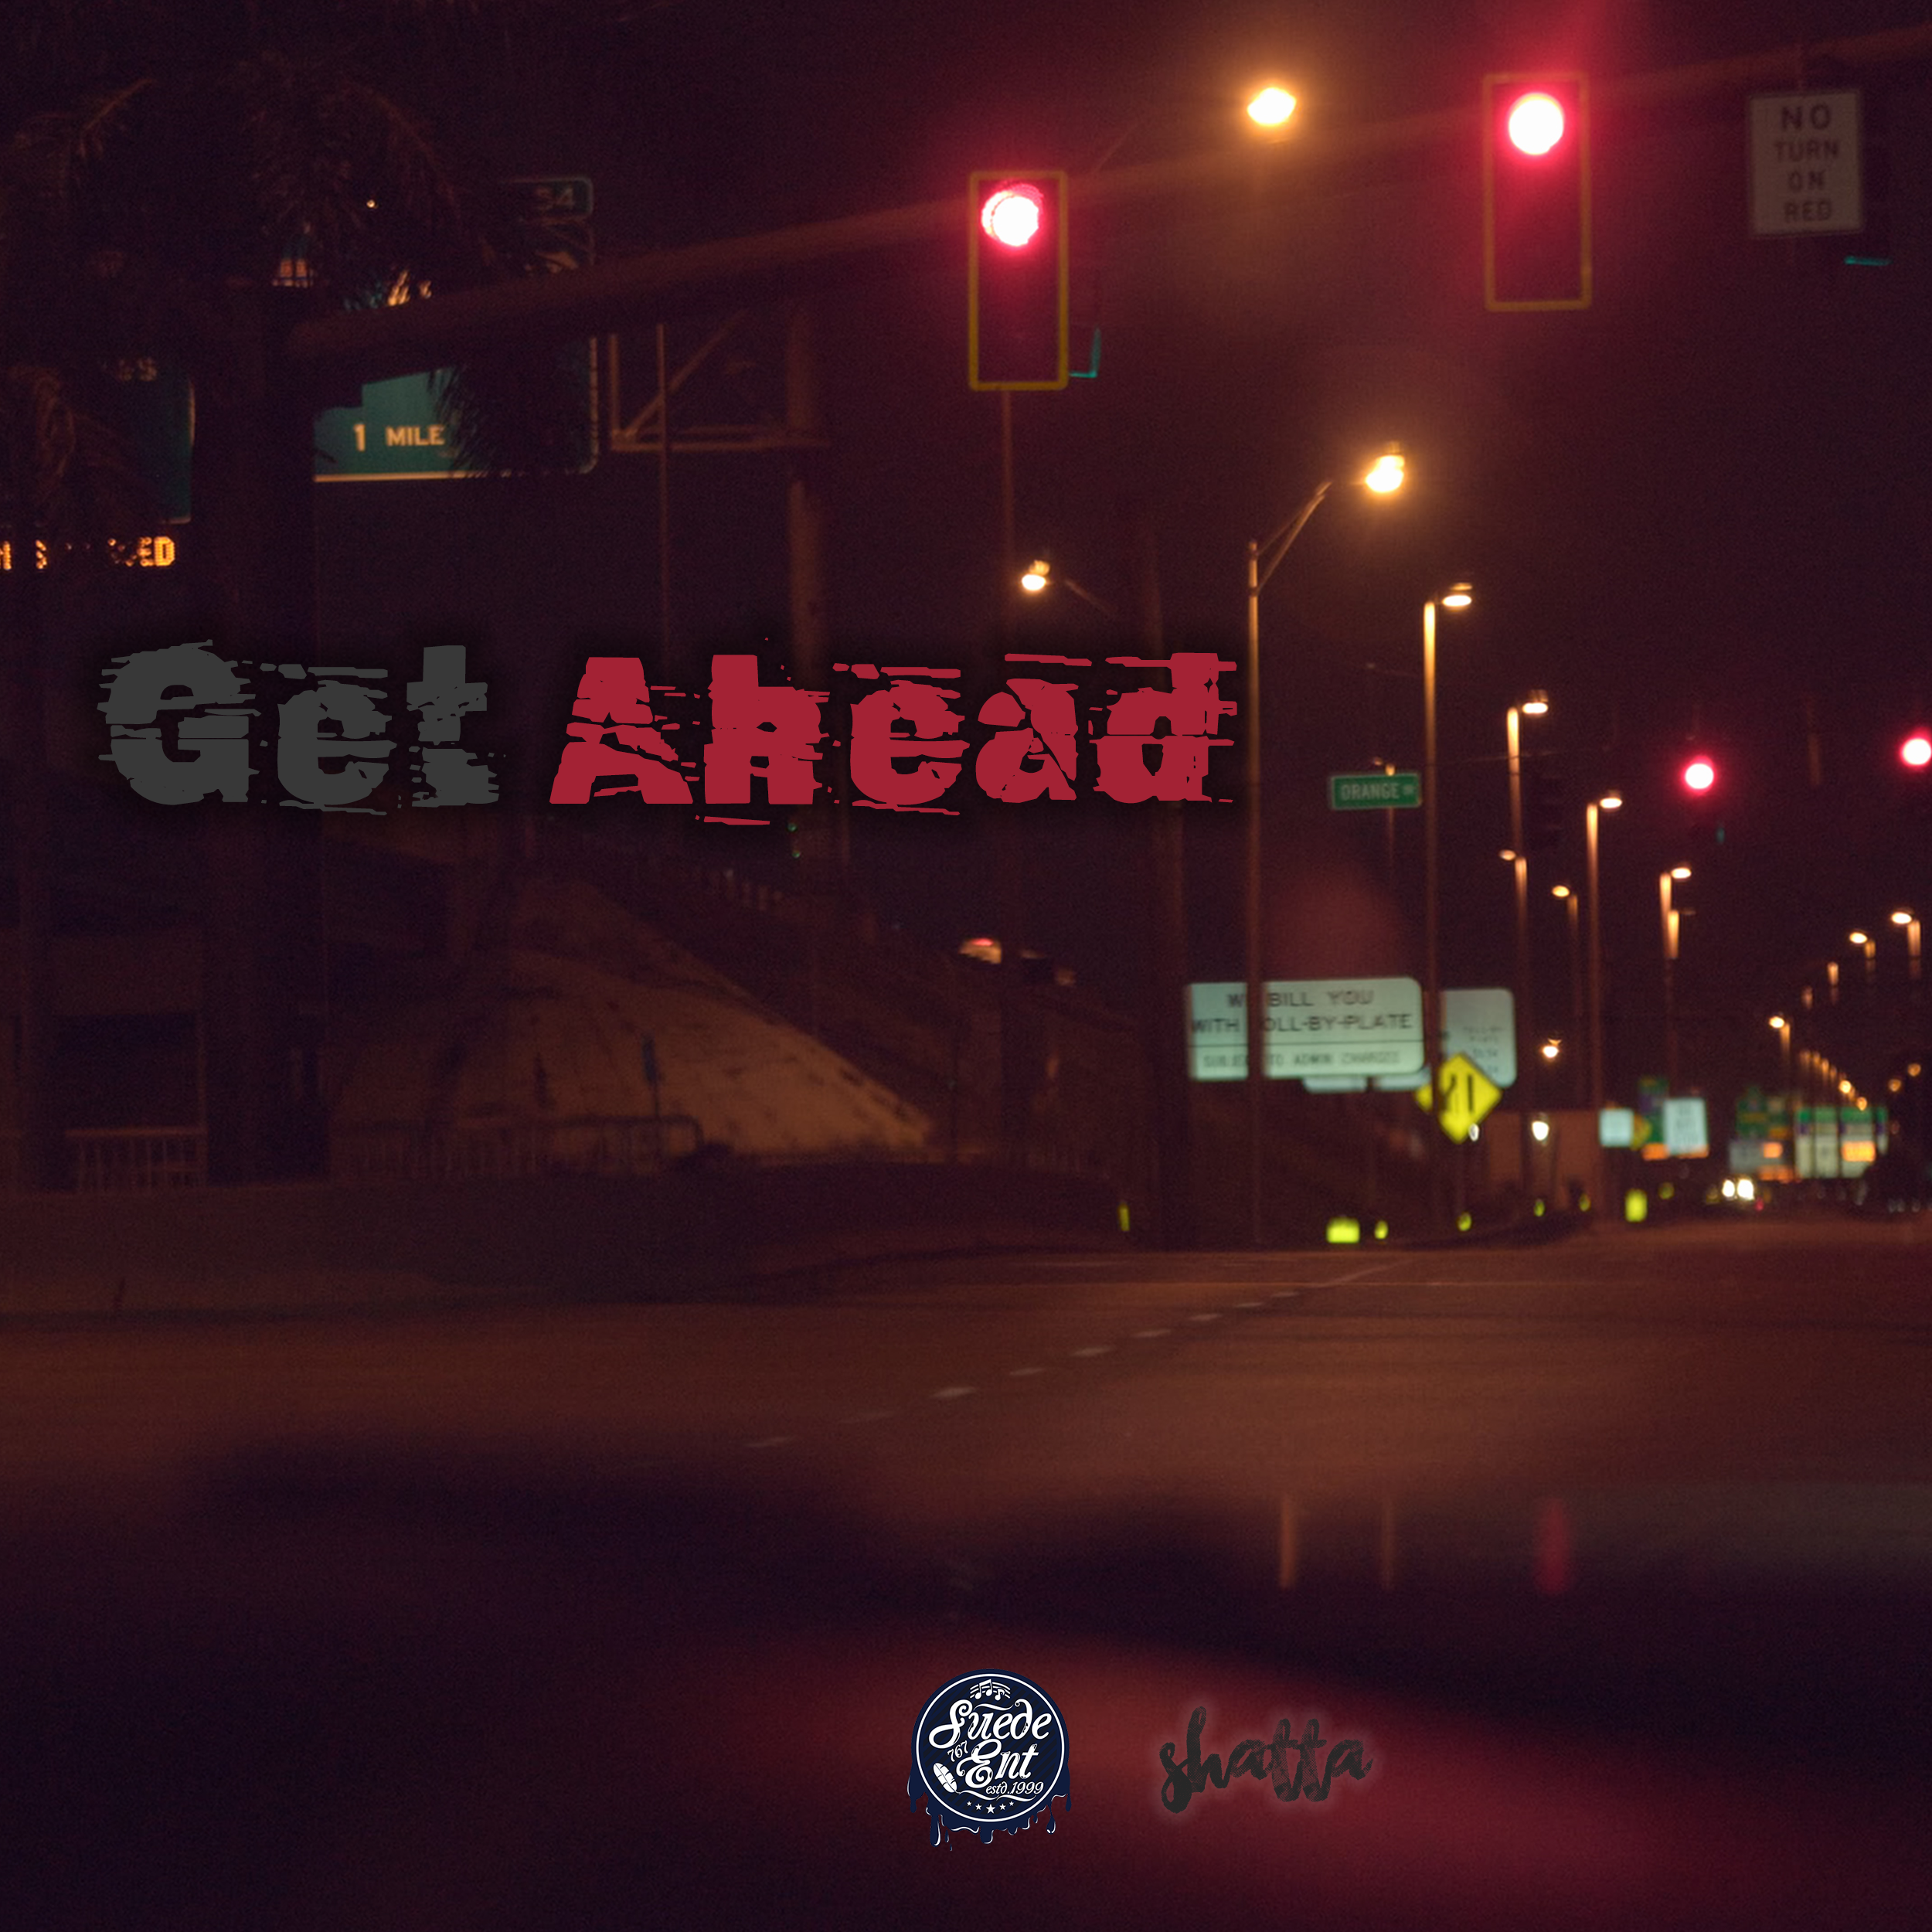 Shatta – Get Ahead (Lyrics)